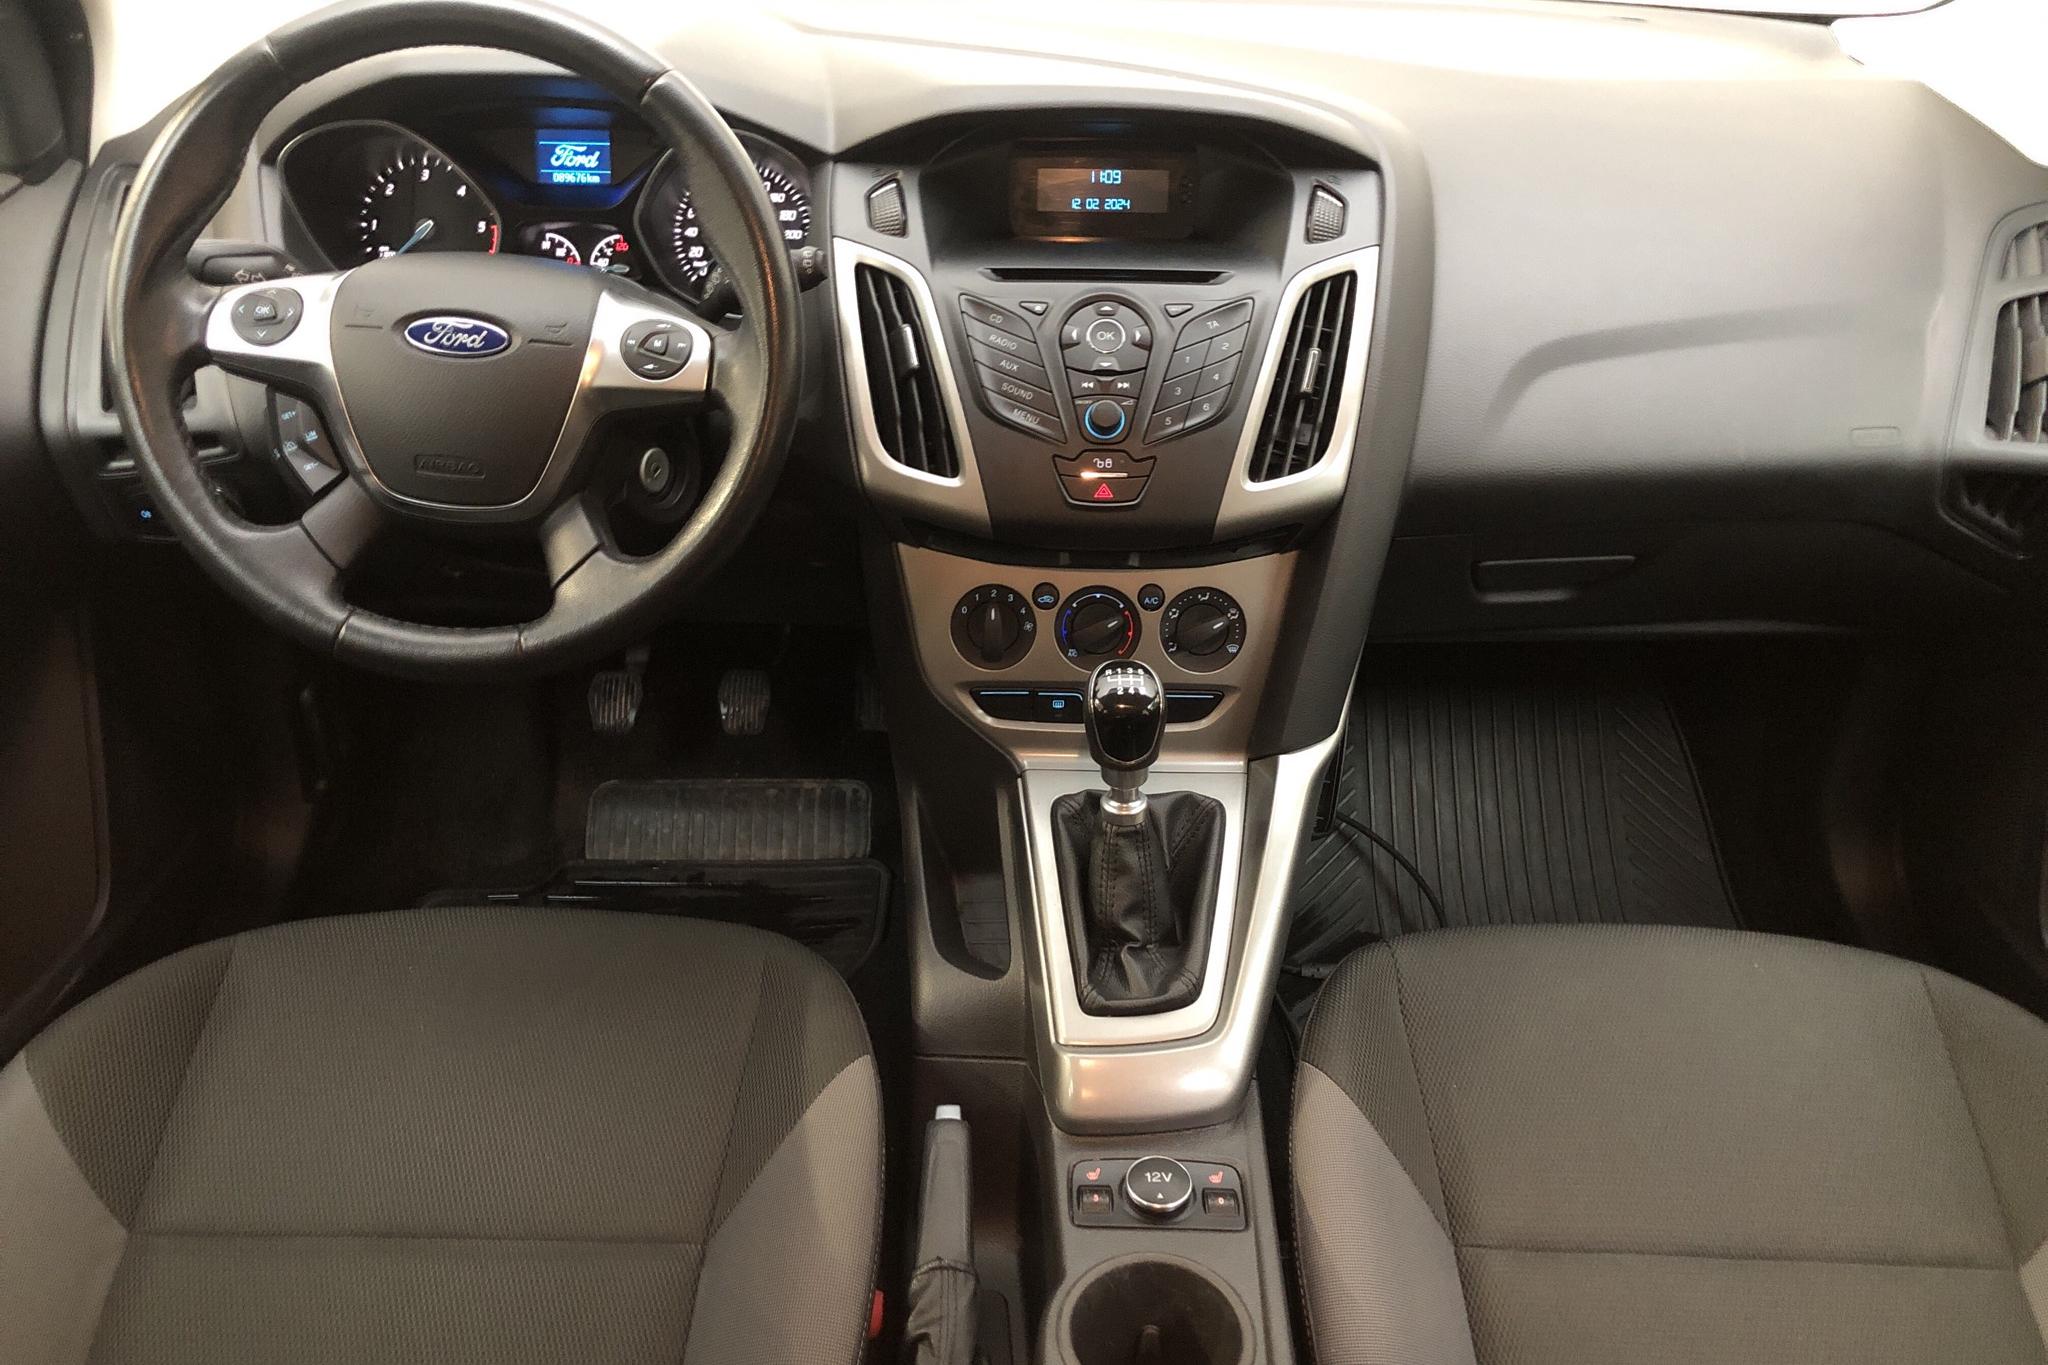 Ford Focus 1.6 TDCi ECOnetic 5dr (105hk) - 8 967 mil - Manuell - vit - 2014